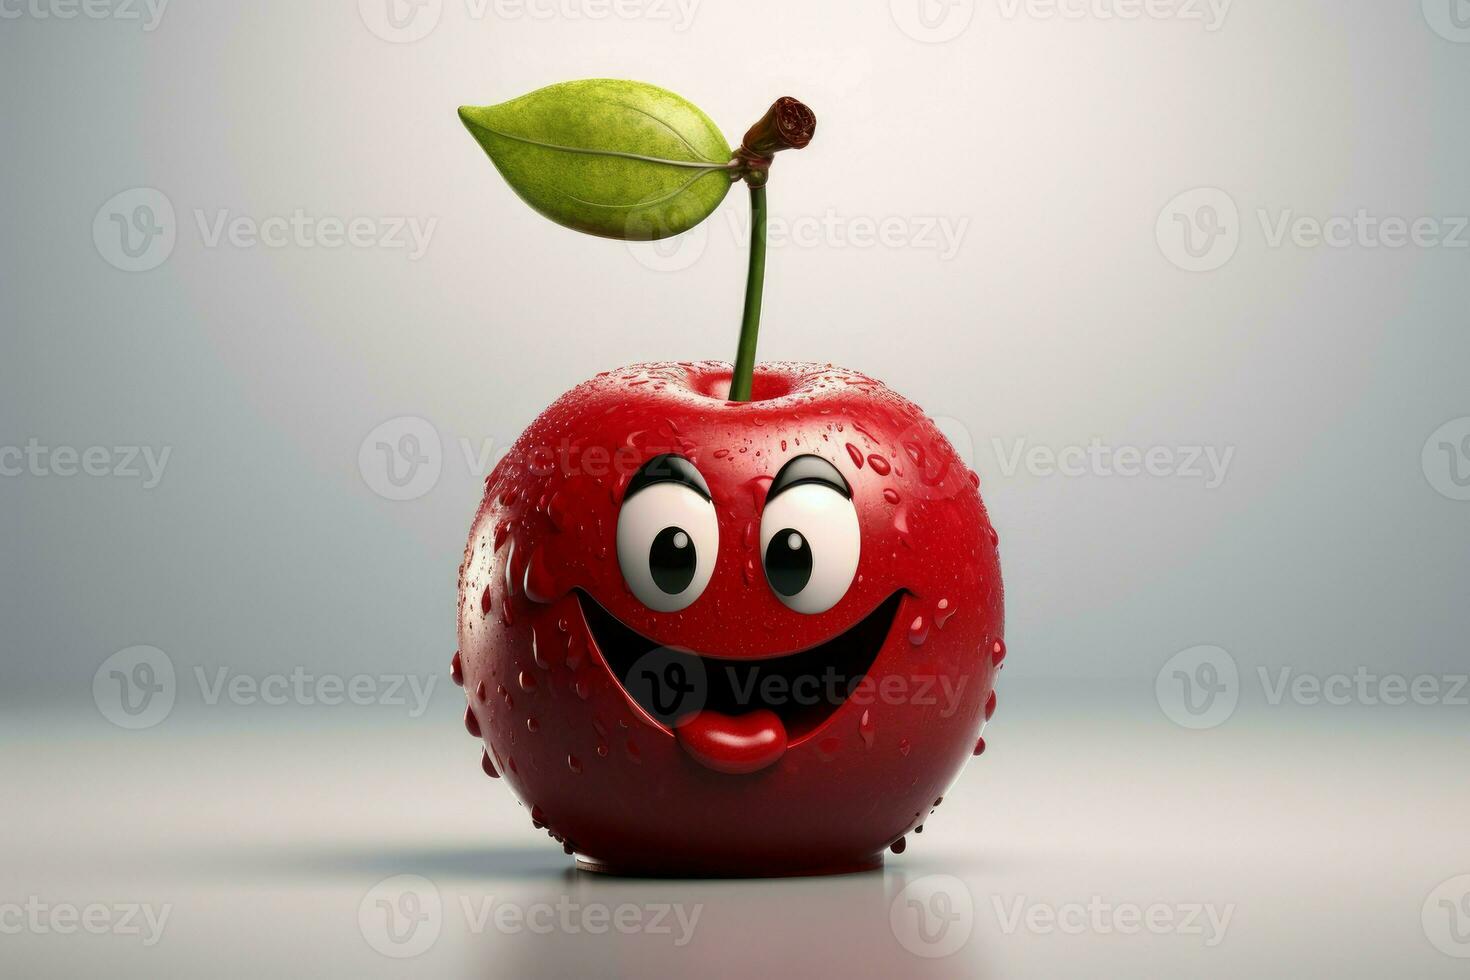 Amusing Funny cherry character. Smiling fruit art photo